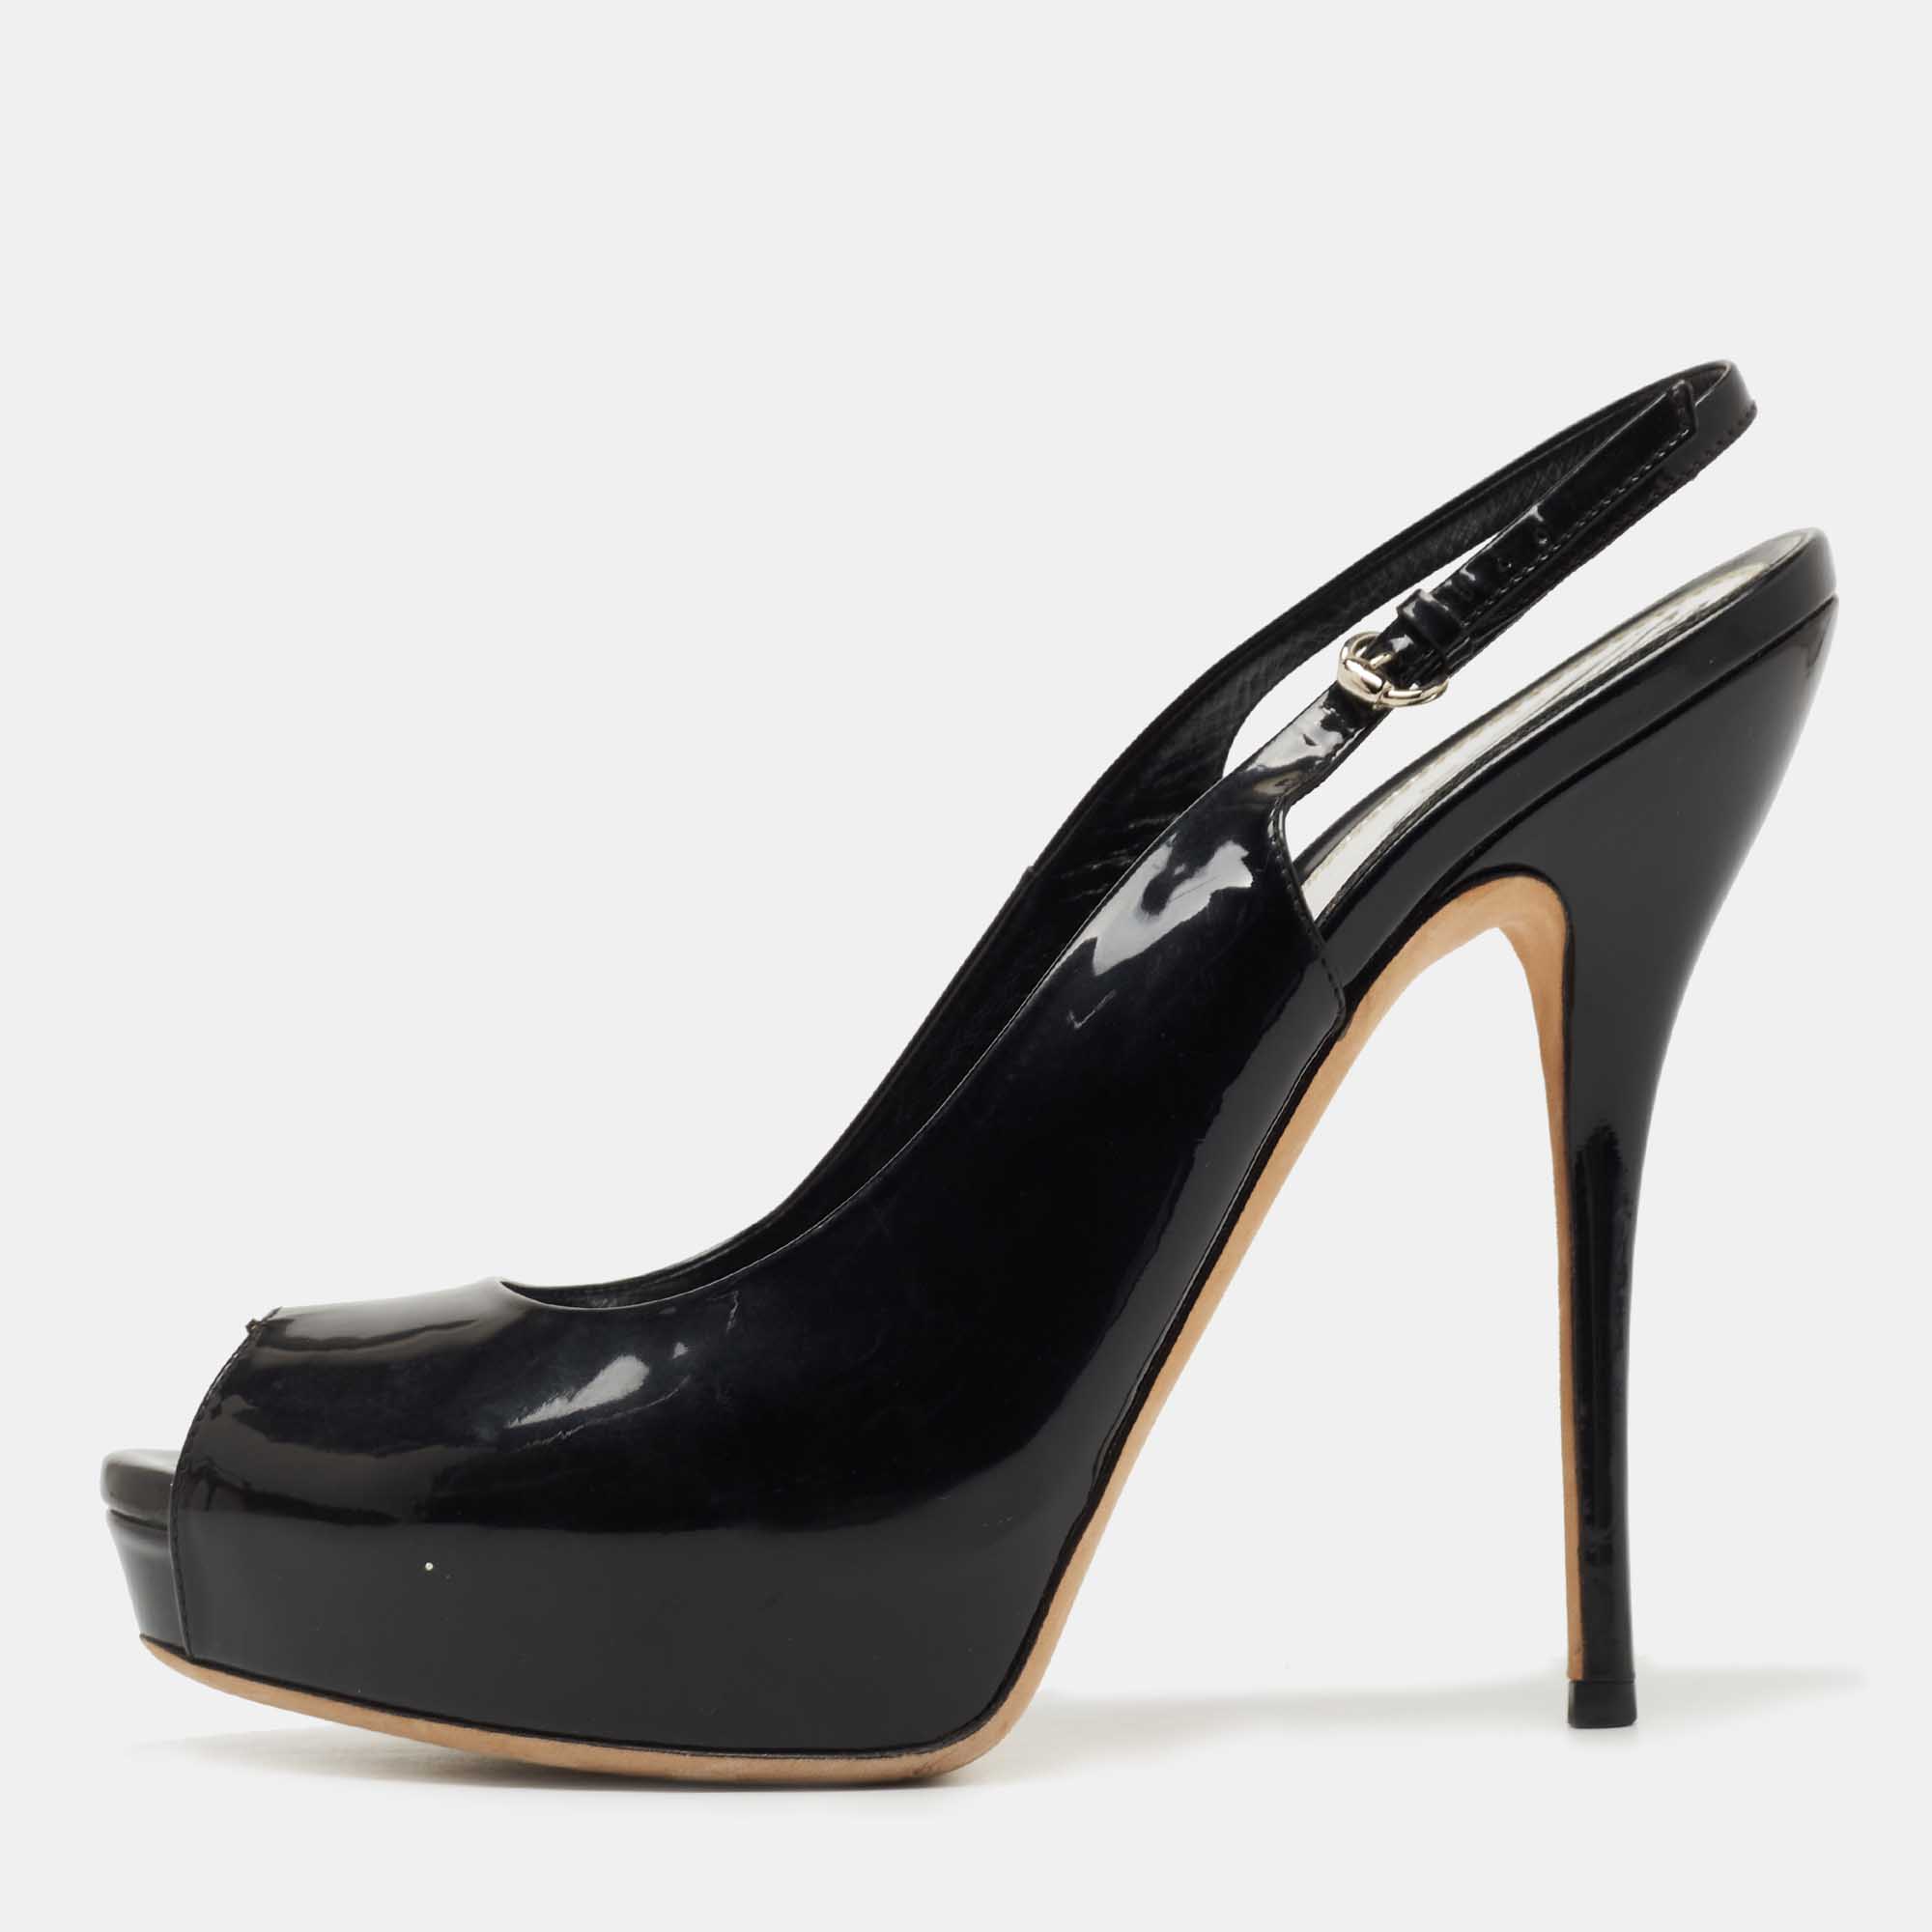 Gucci Black Patent Leather Sofia Slingback Sandals Size 39.5